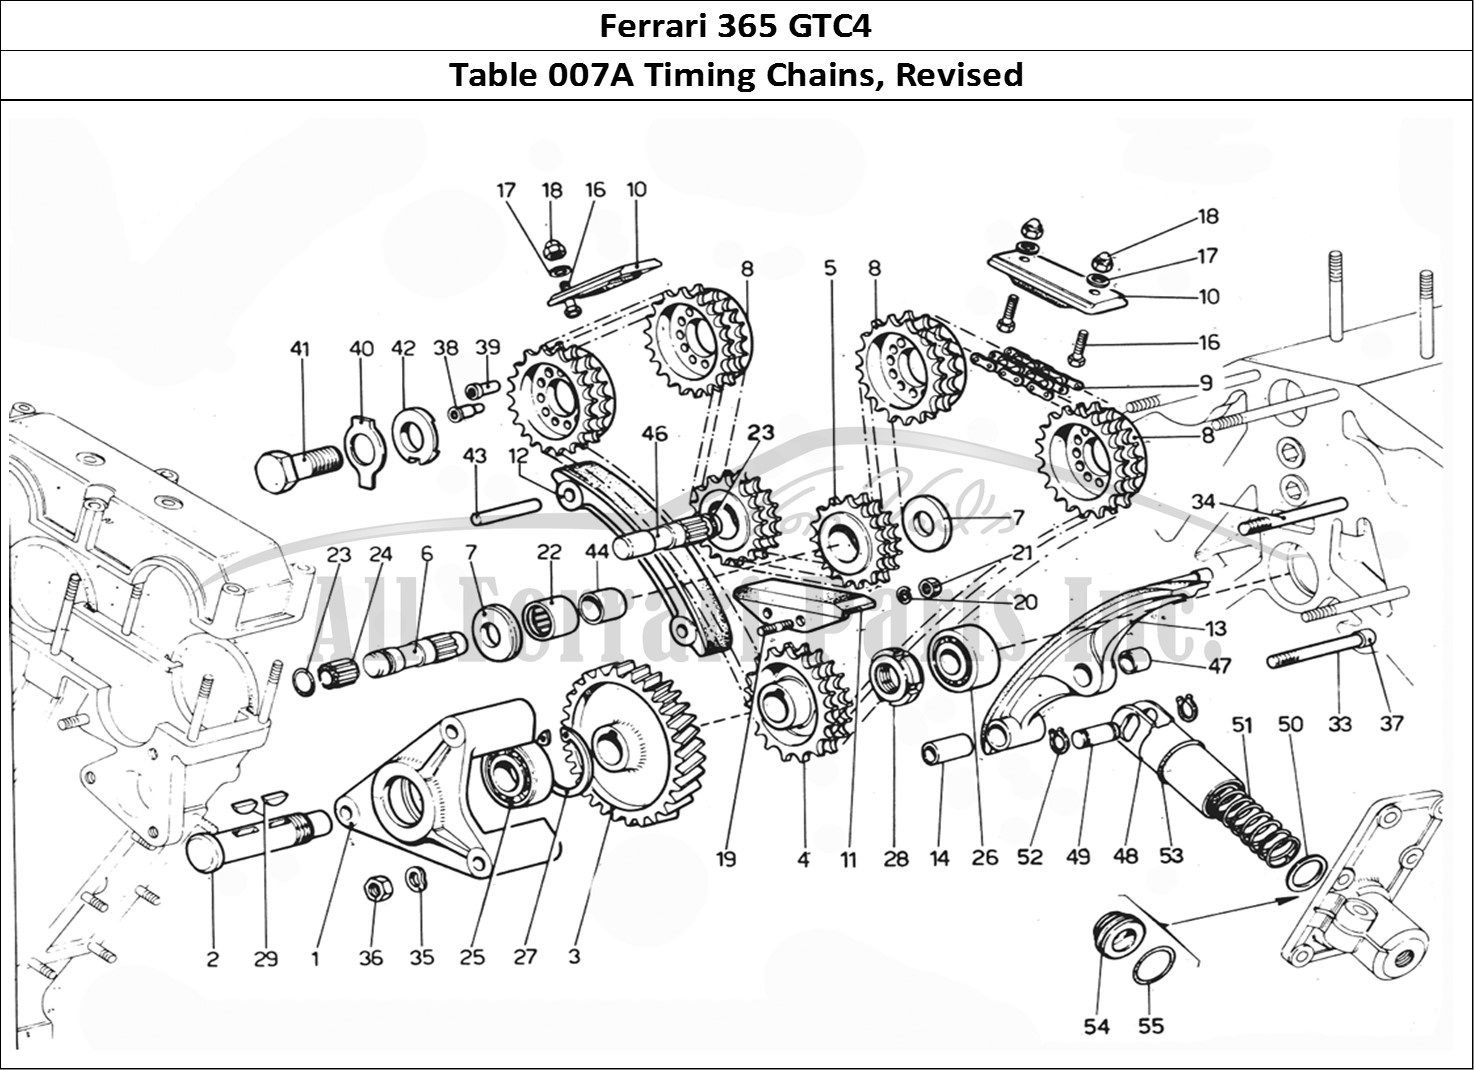 Ferrari Parts Ferrari 365 GTC4 (Mechanical) Page 007 Timing chains - Revision